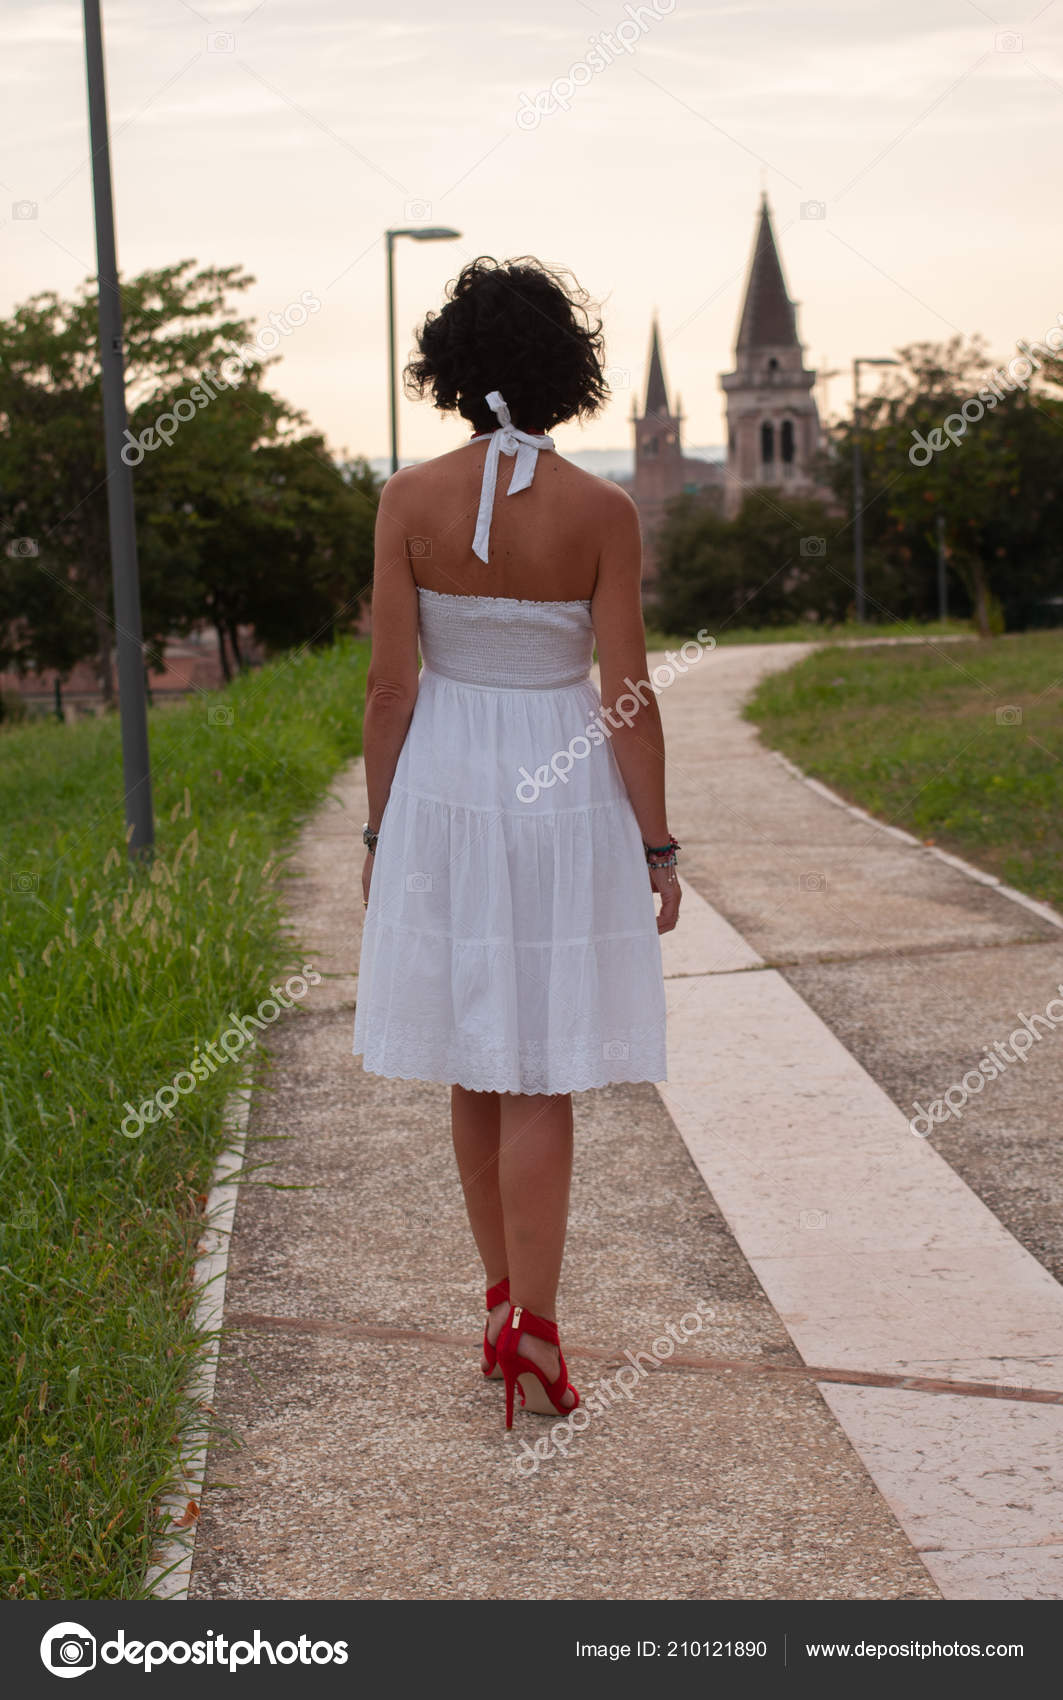 white dress and black heels